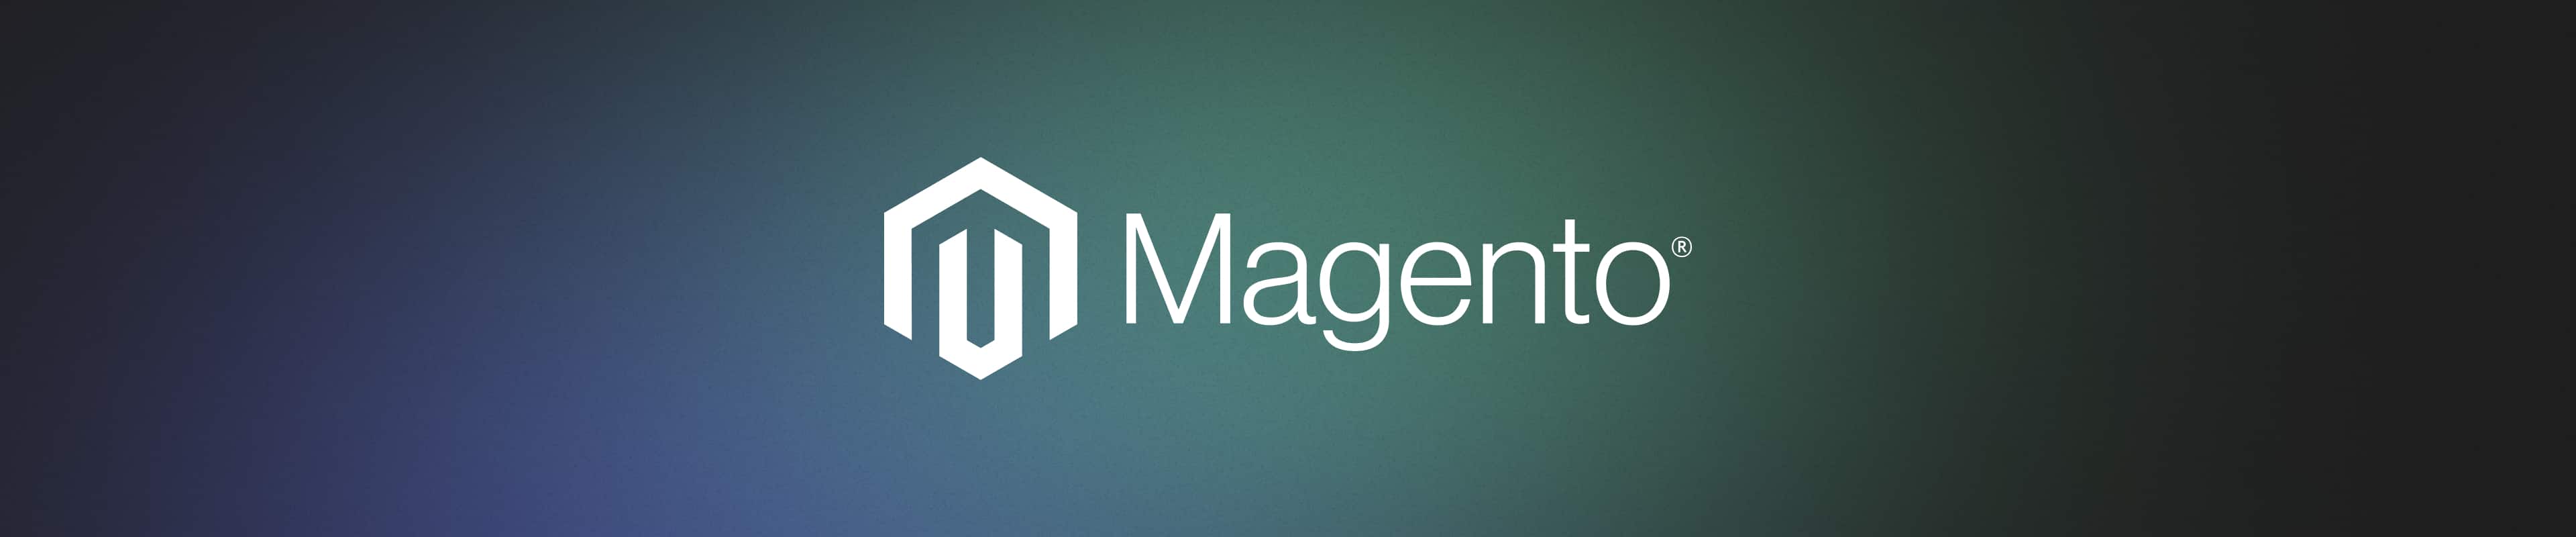 Magento web development agency